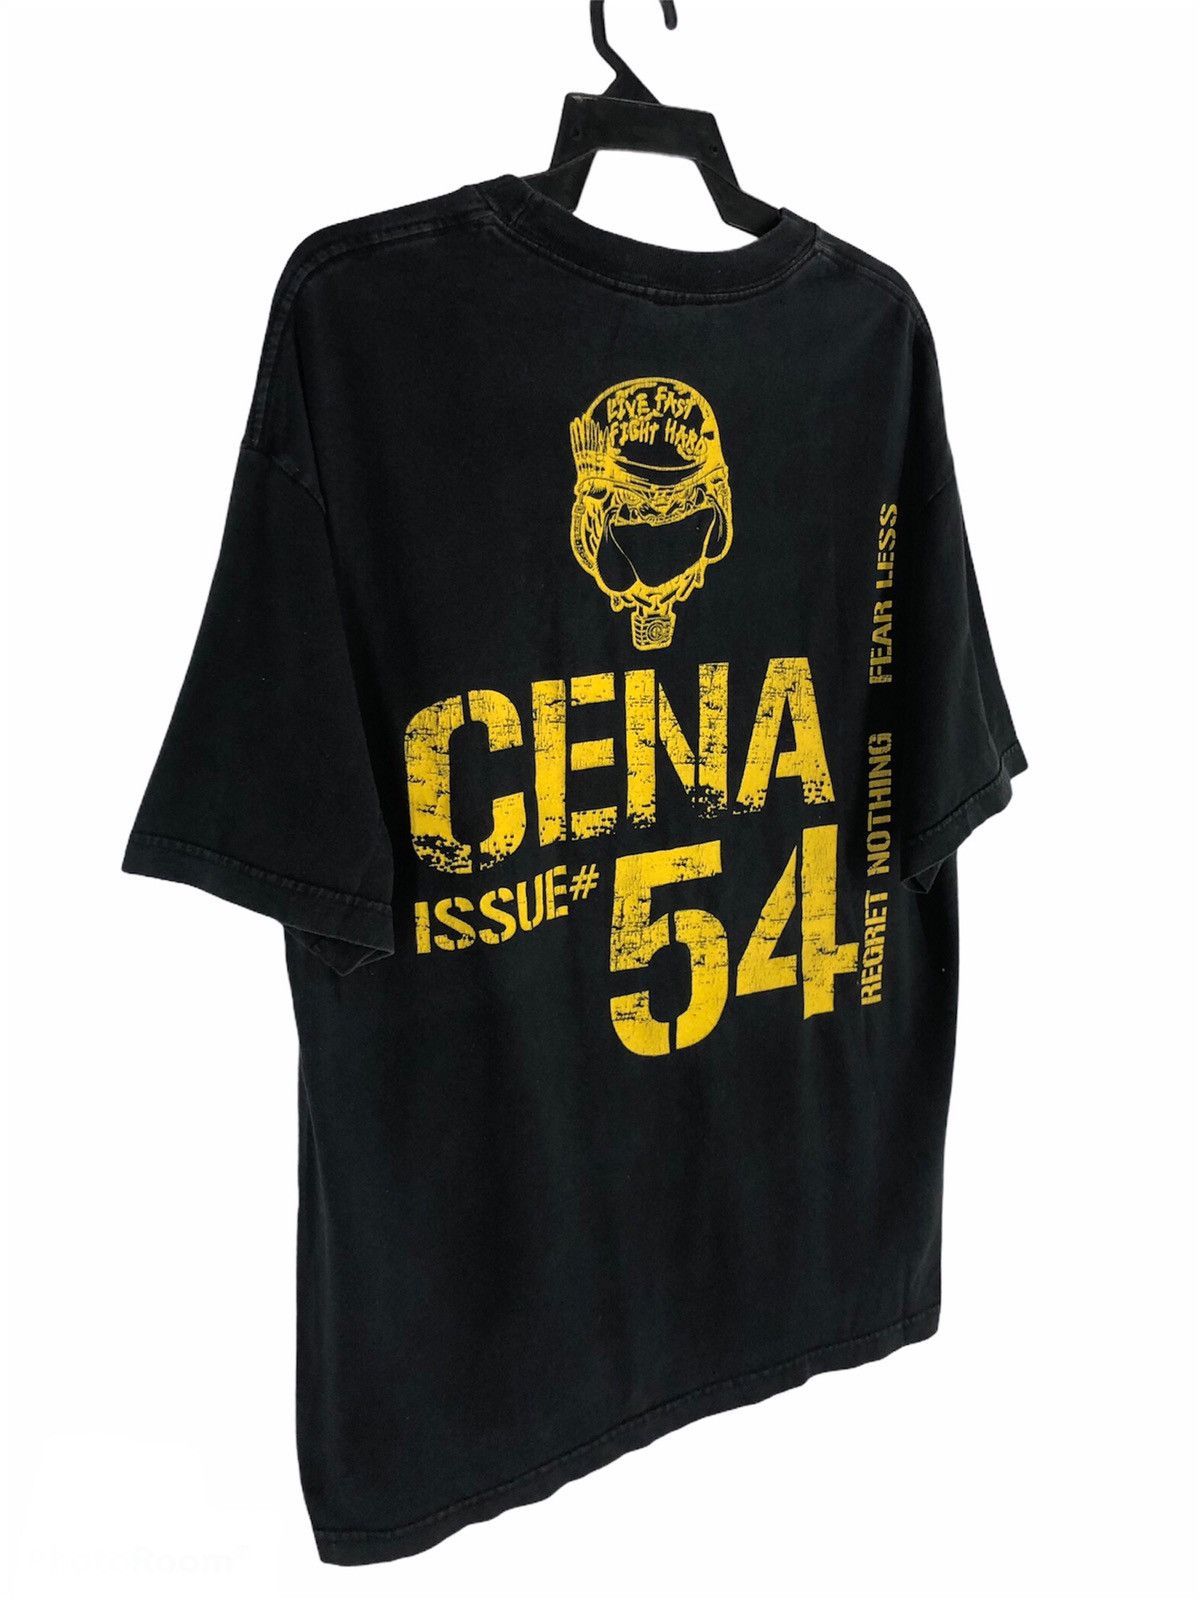 Vintage WWE John Cena Live Fast Fight Hard T Shirt cw21 Size US XL / EU 56 / 4 - 5 Thumbnail